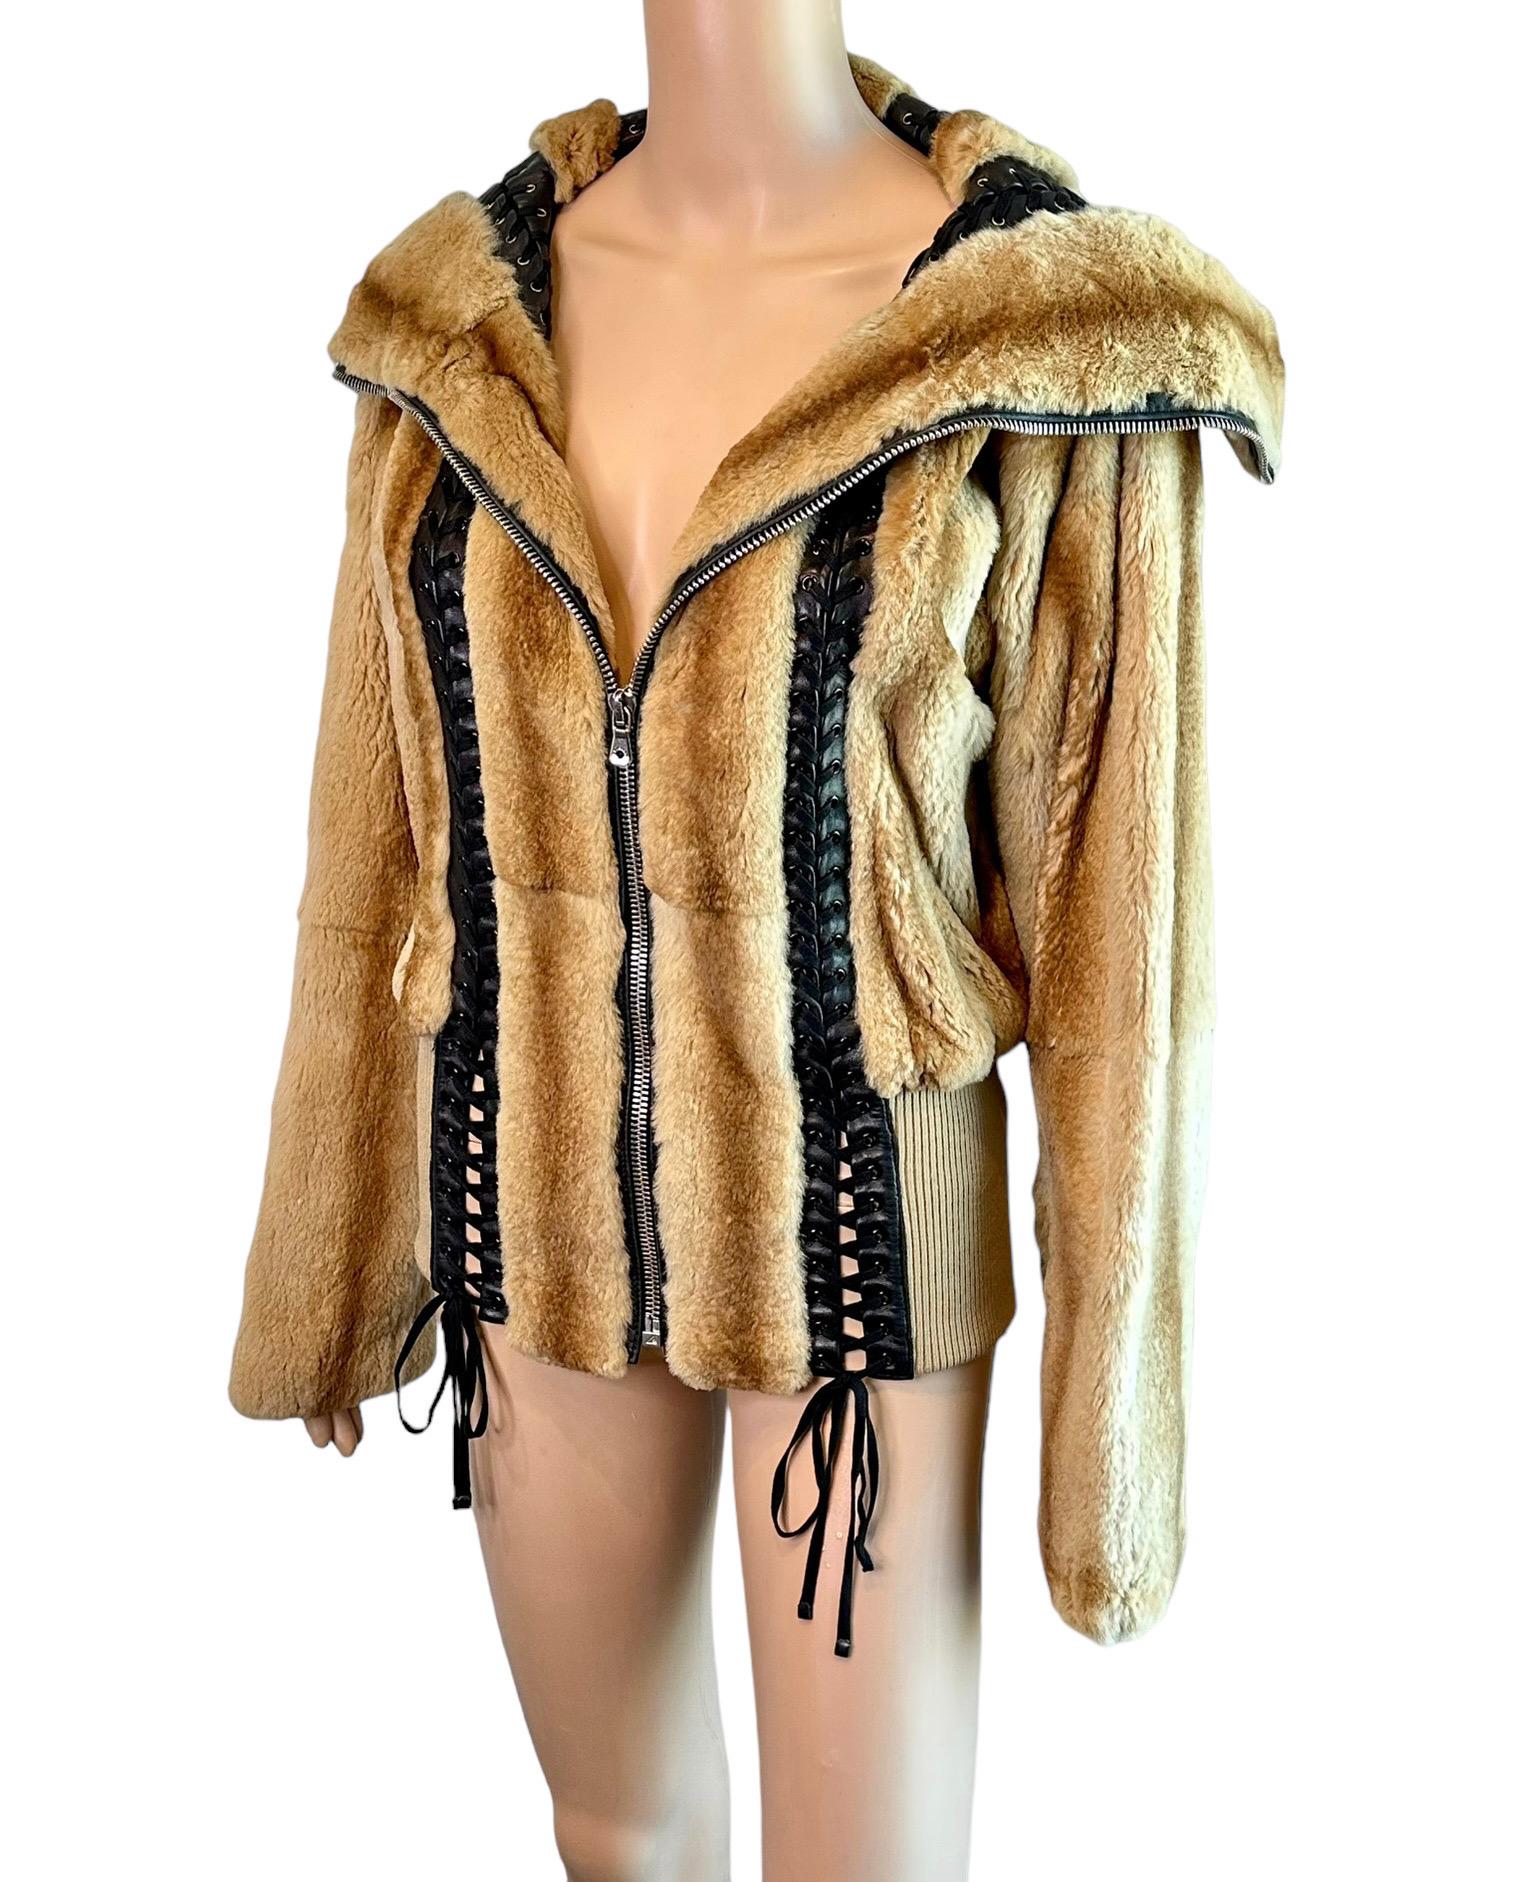 Dolce & Gabbana S/S 2003 Bondage Lace Up Weasel Fur Jacket Coat For Sale 2